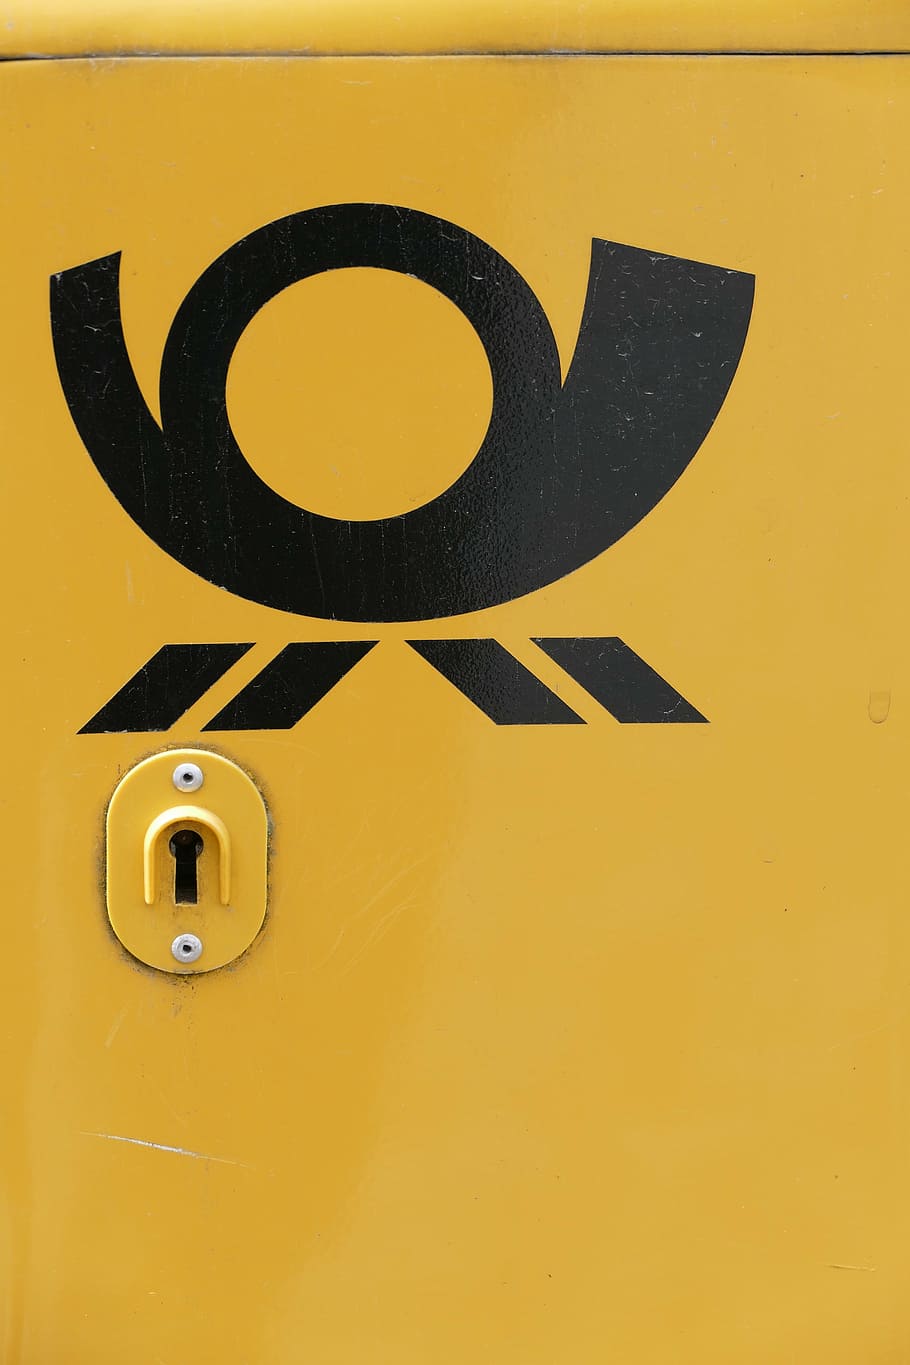 caixas de correio, deutsche post, post horn, amarelo, close-up, ninguém, cor preta, dentro de casa, metal, segurança